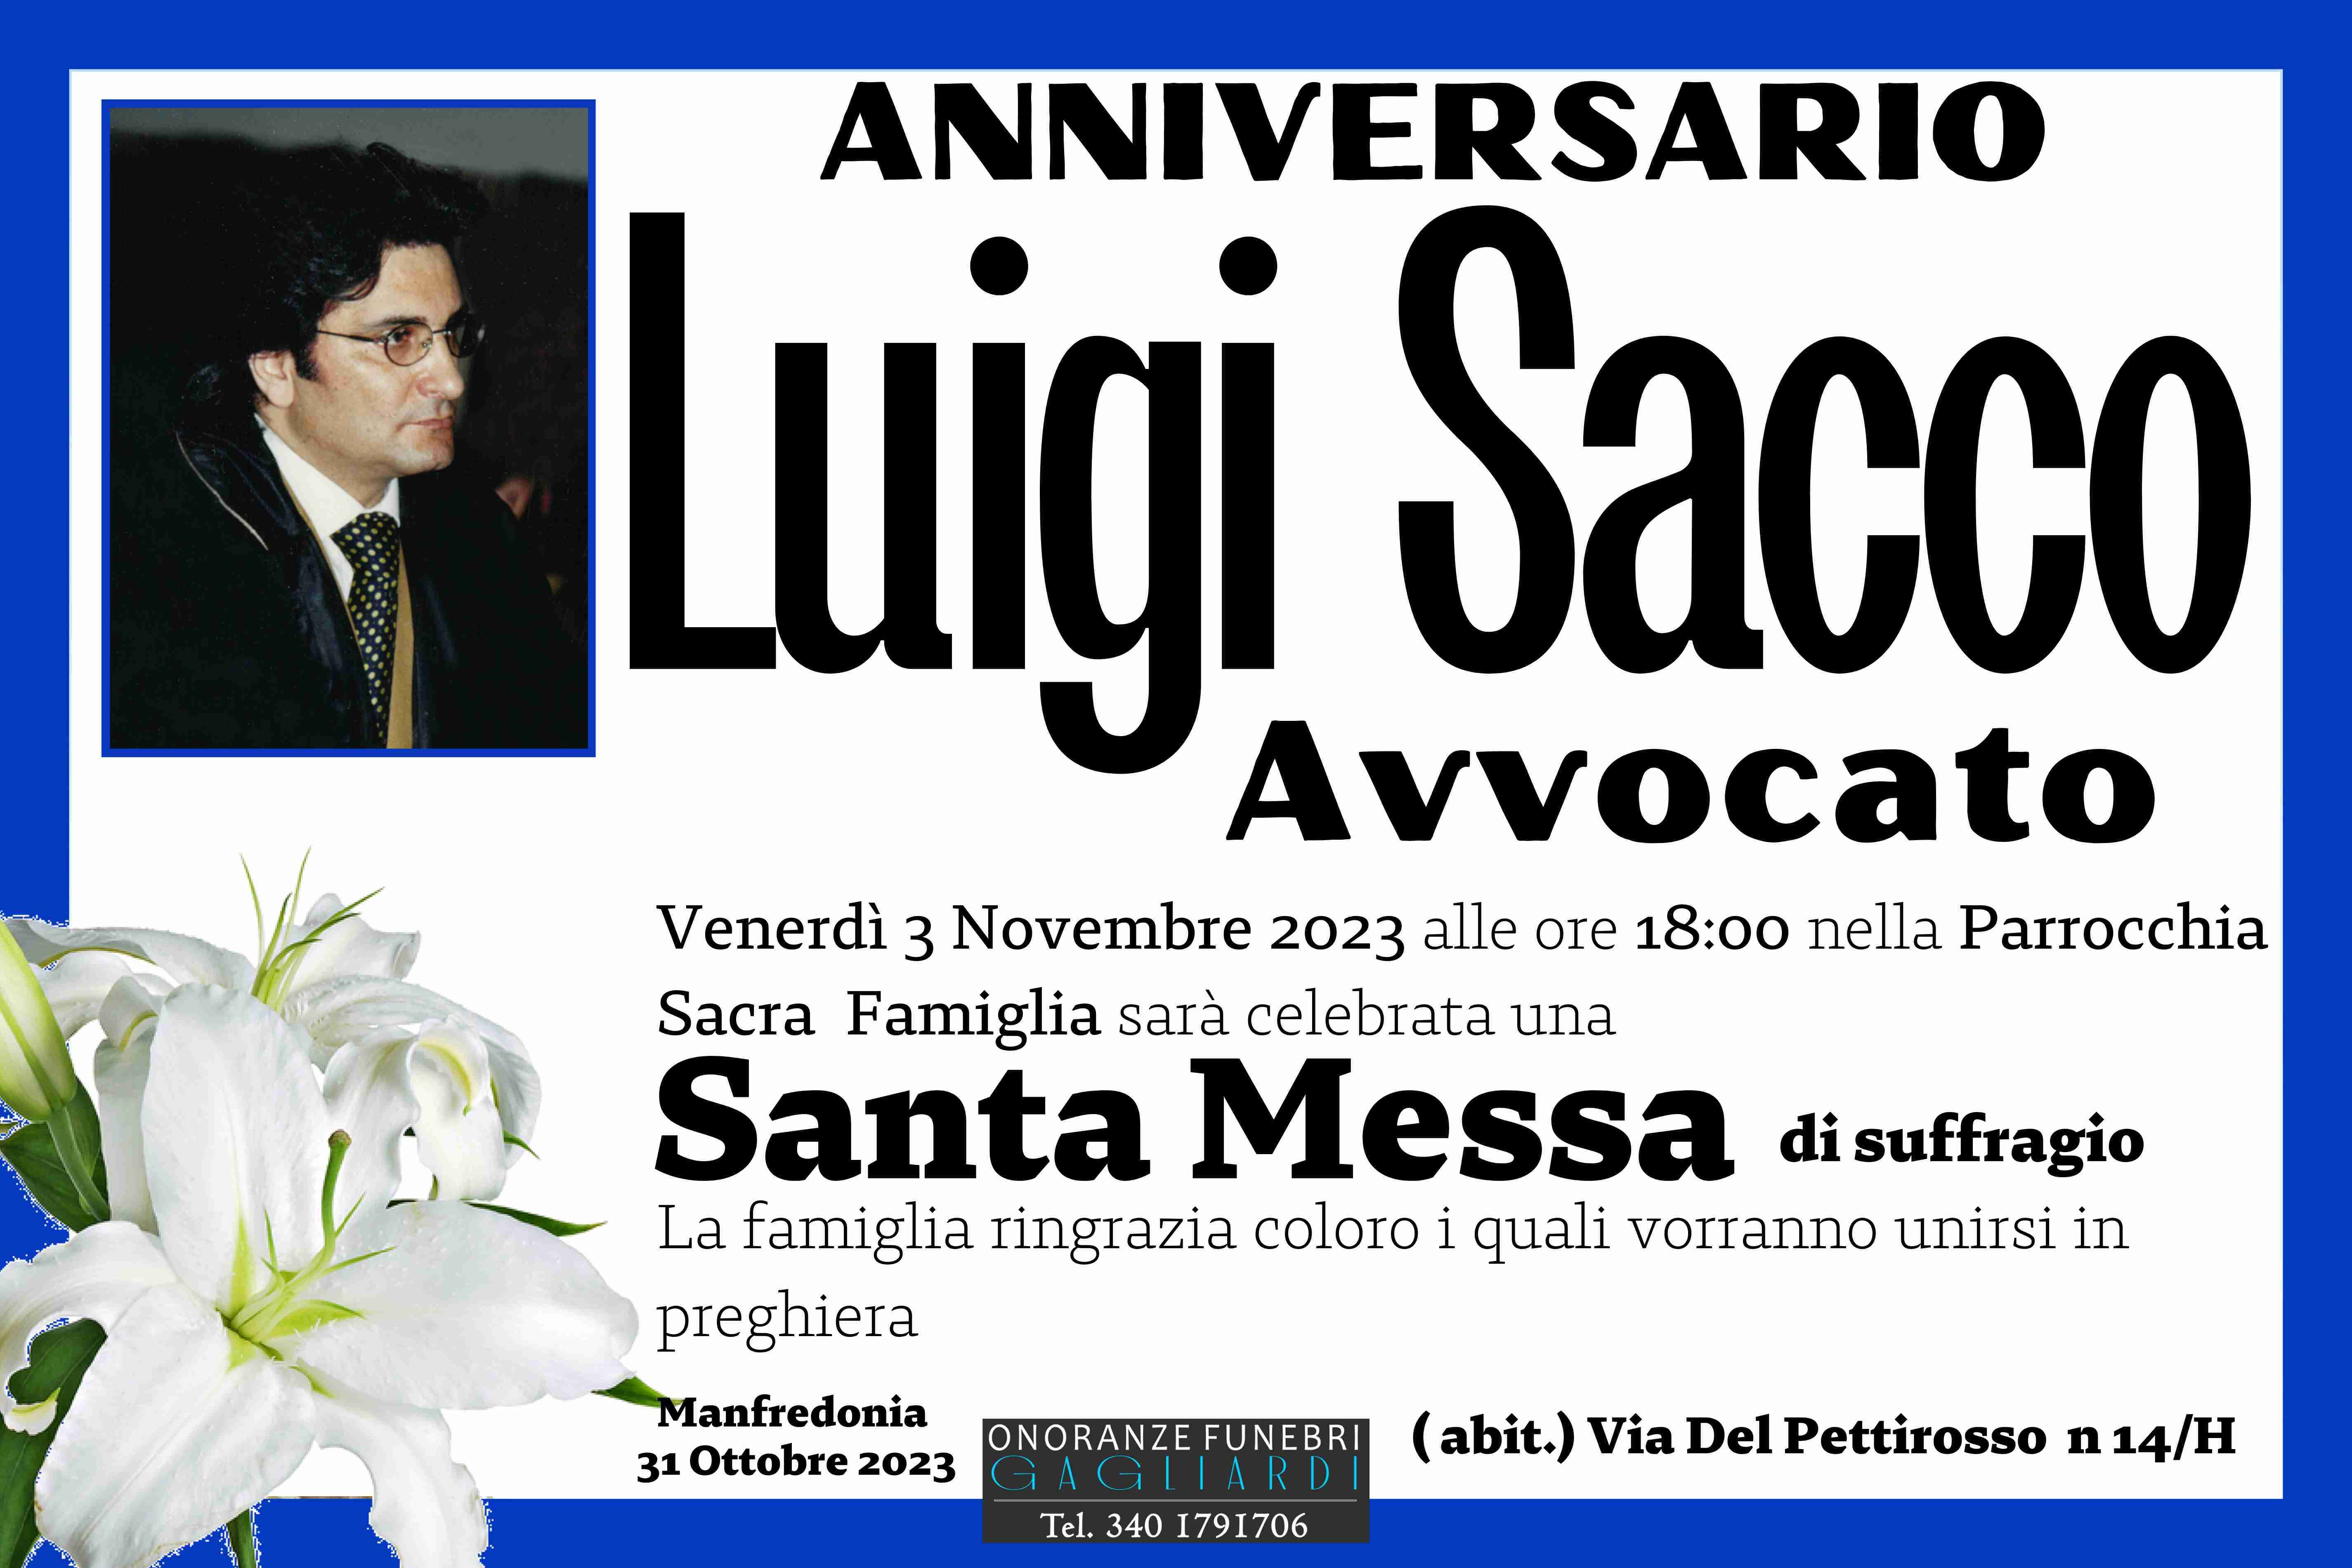 Luigi Sacco